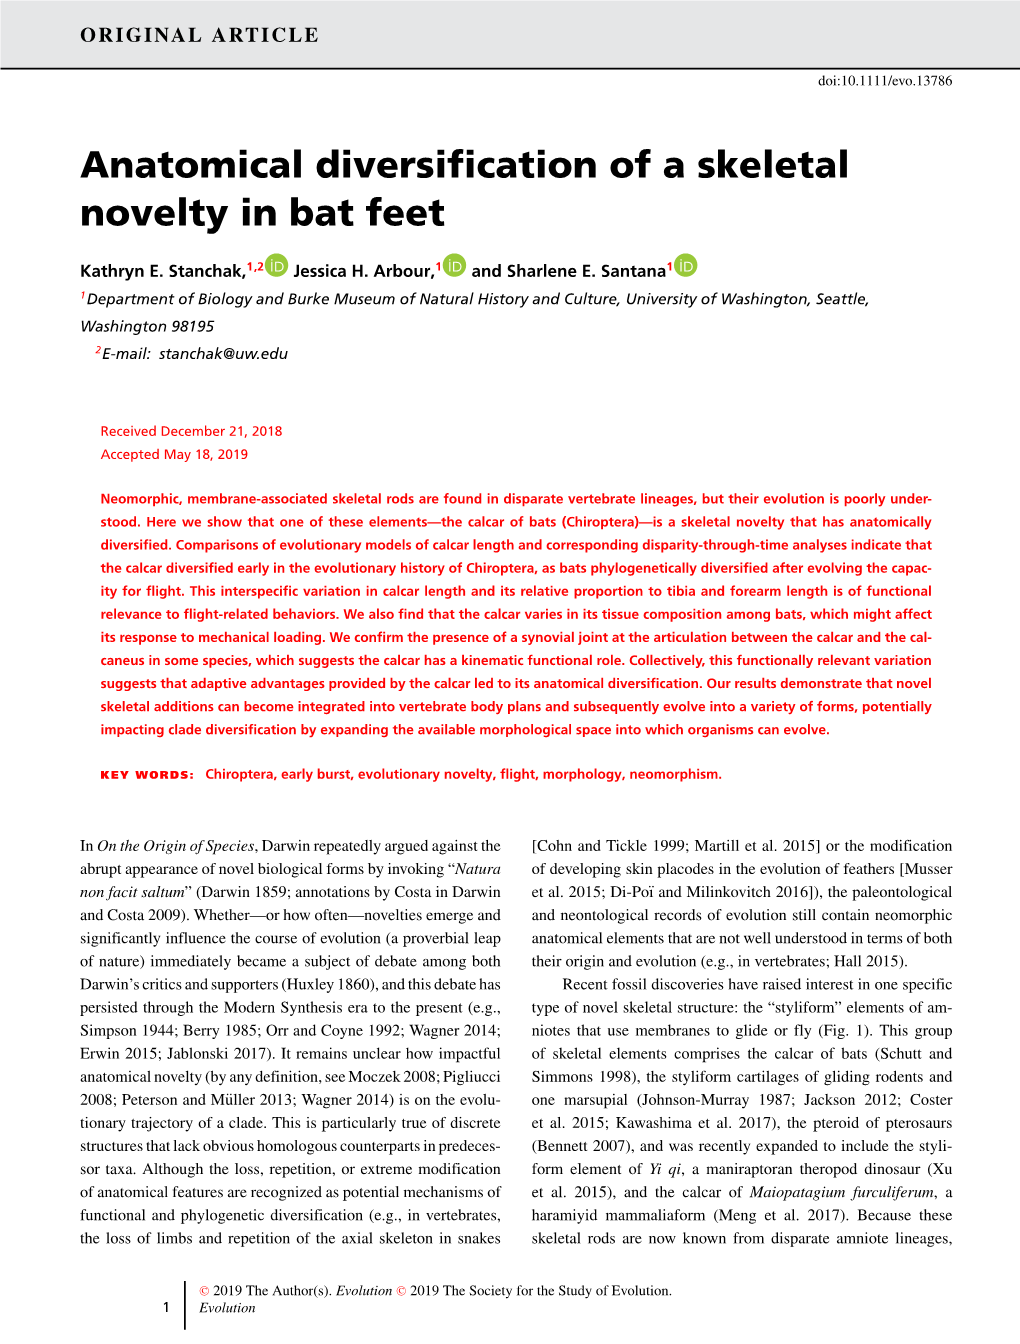 Anatomical Diversification of a Skeletal Novelty in Bat Feet